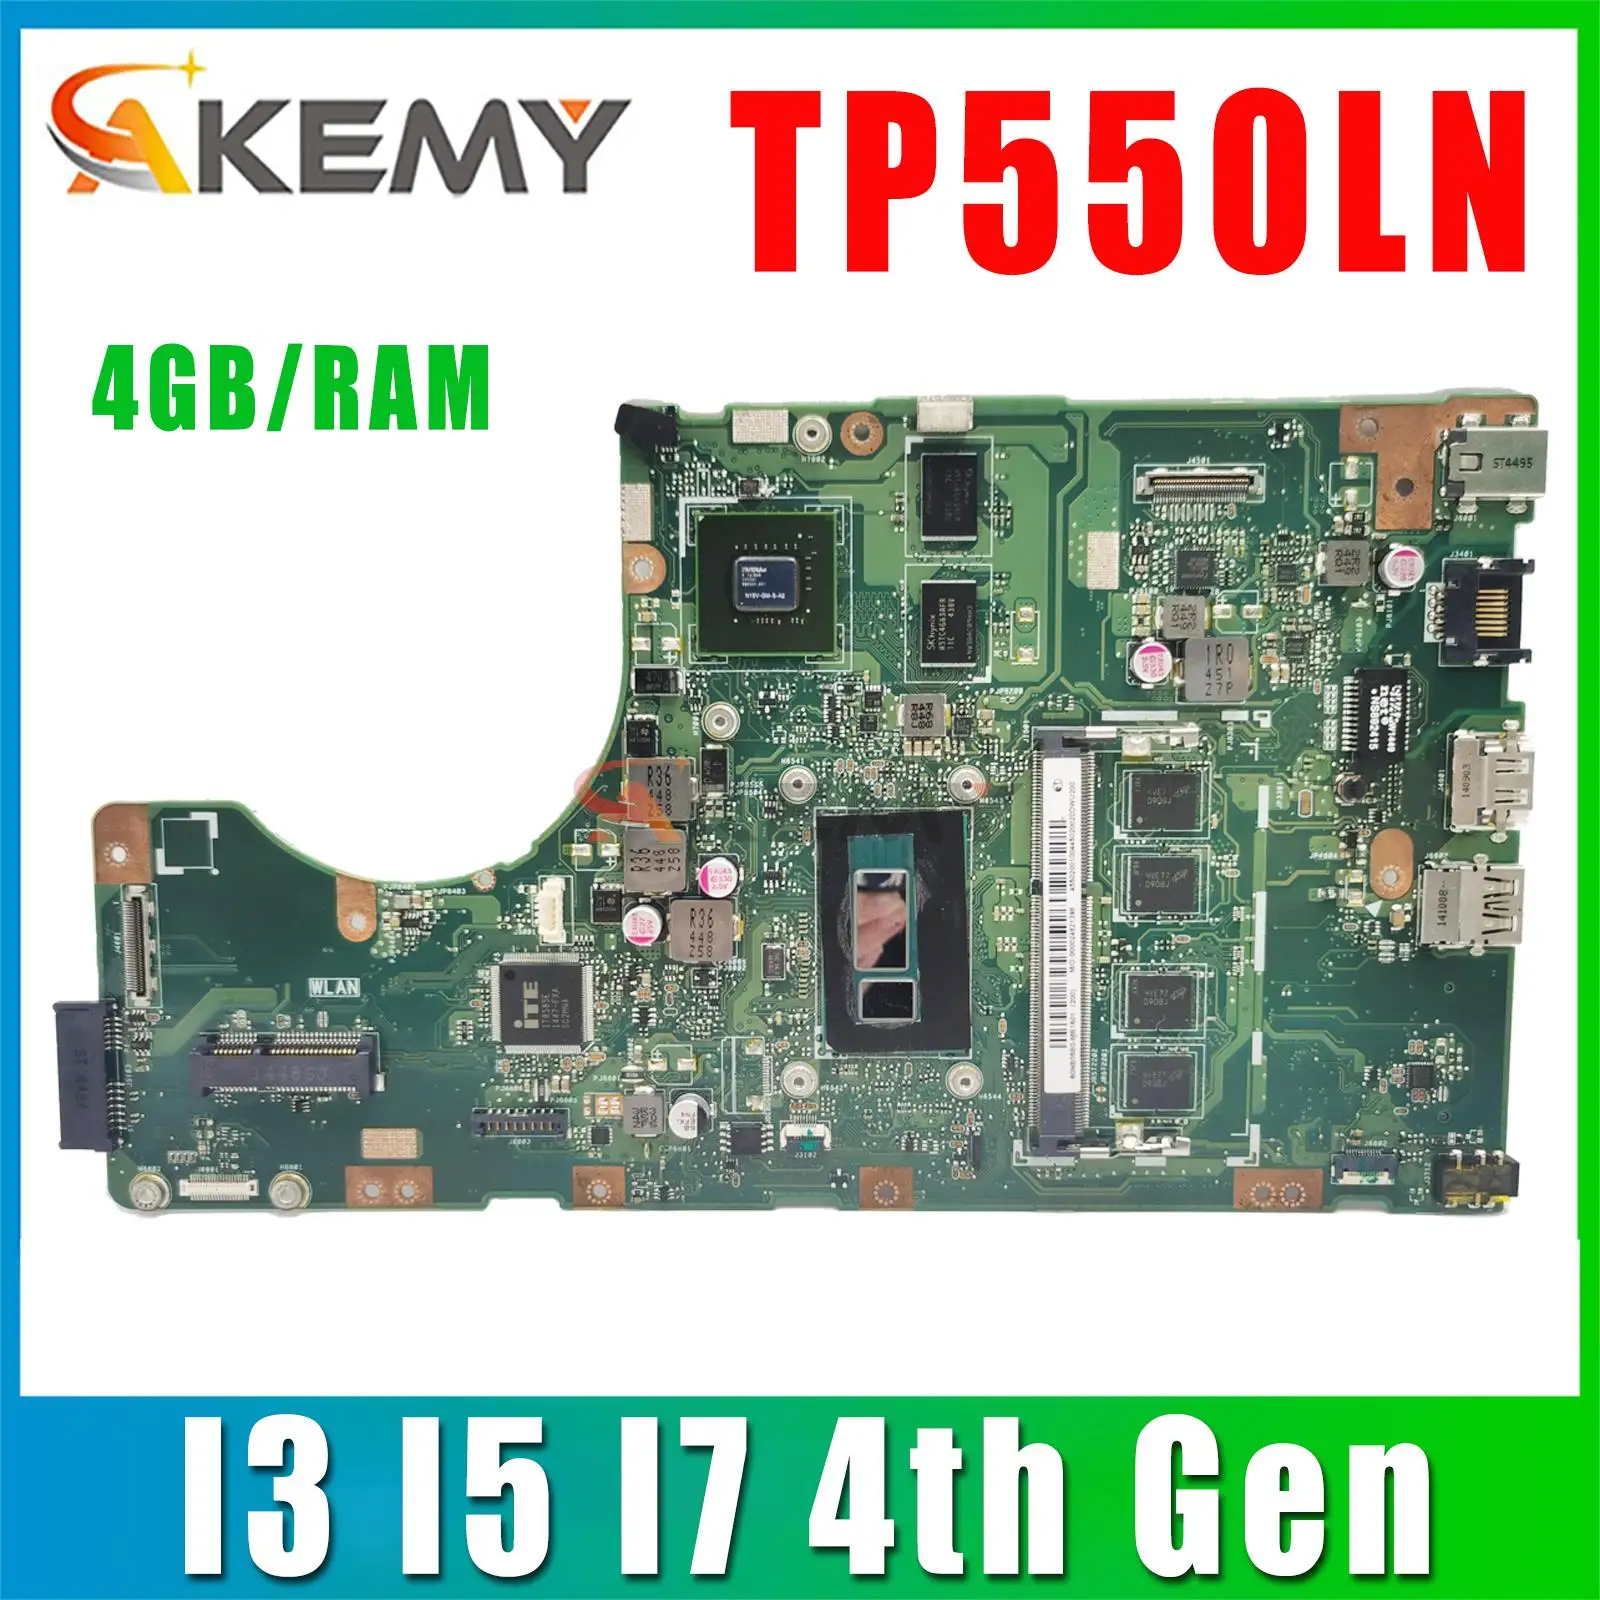 

TP550LN Laptop Motherboard for ASUS TP550L TP550LD TP550LJ TP550LA Mainboard I3 I5 I7 4th Gen CPU 4GB/RAM GT820M/UMA